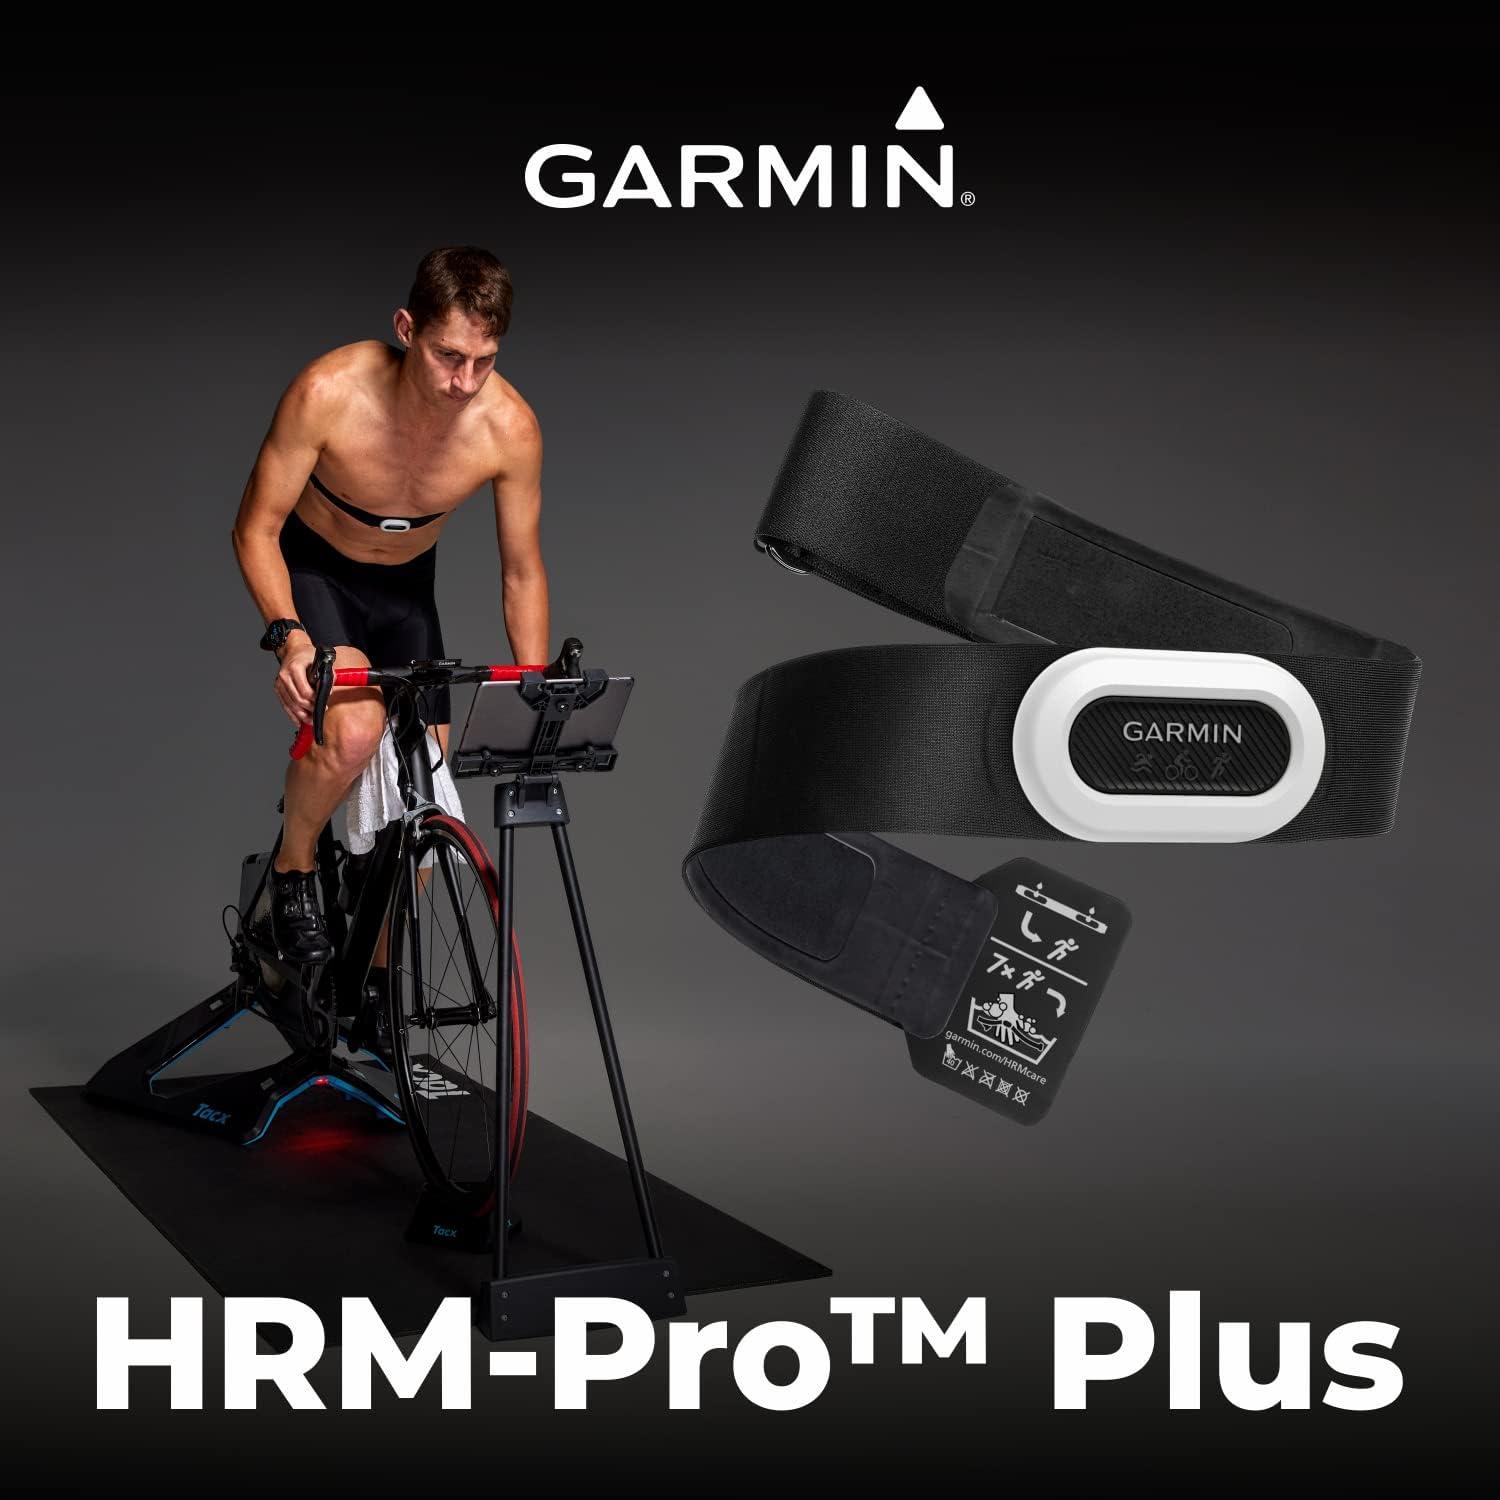 HRM-Pro Plus – Garmin